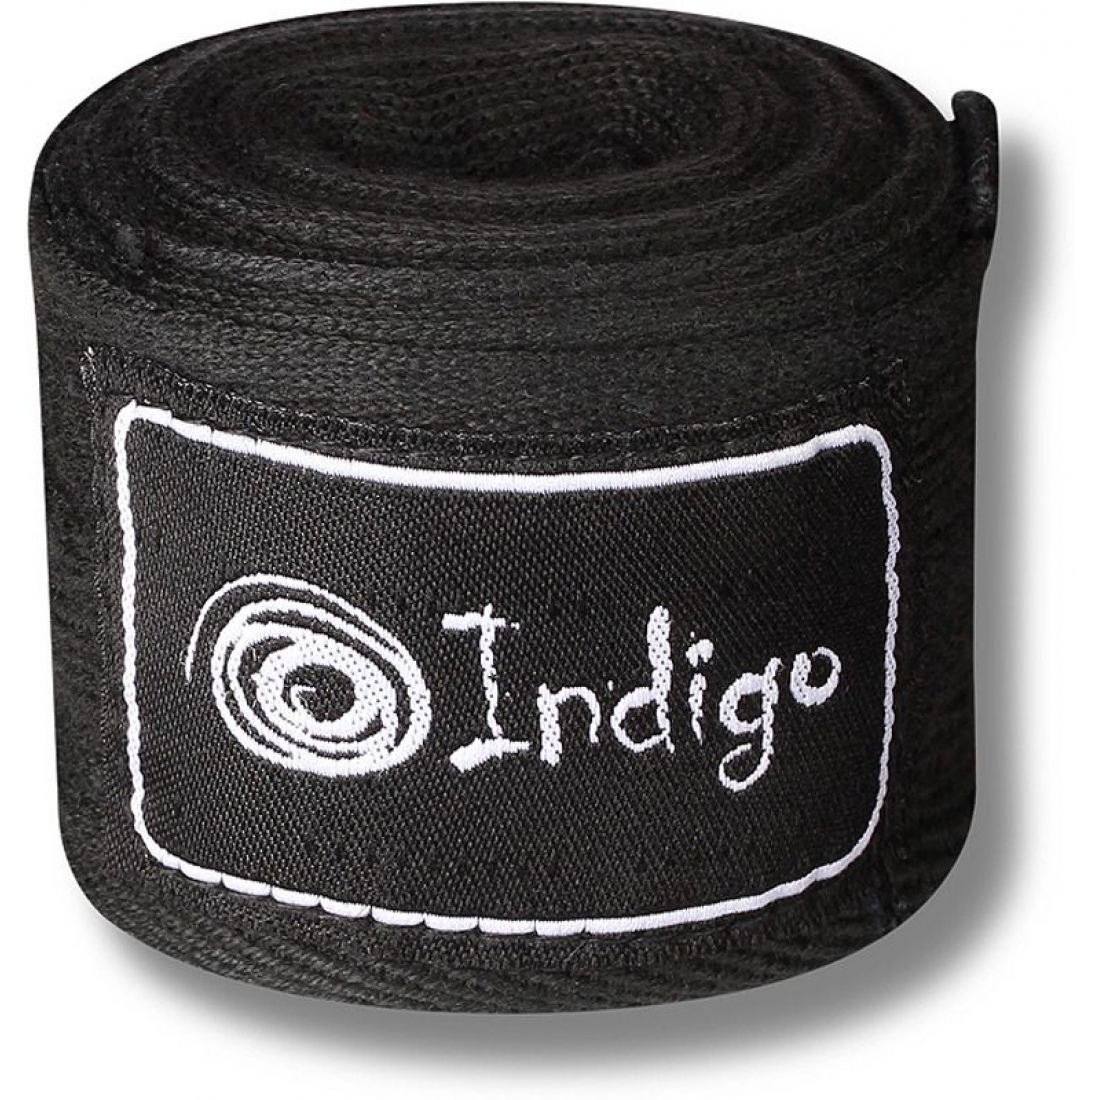 Бинты боксерские Indigo, длина 2,5 м, материал х/б, эластан, цвет черный